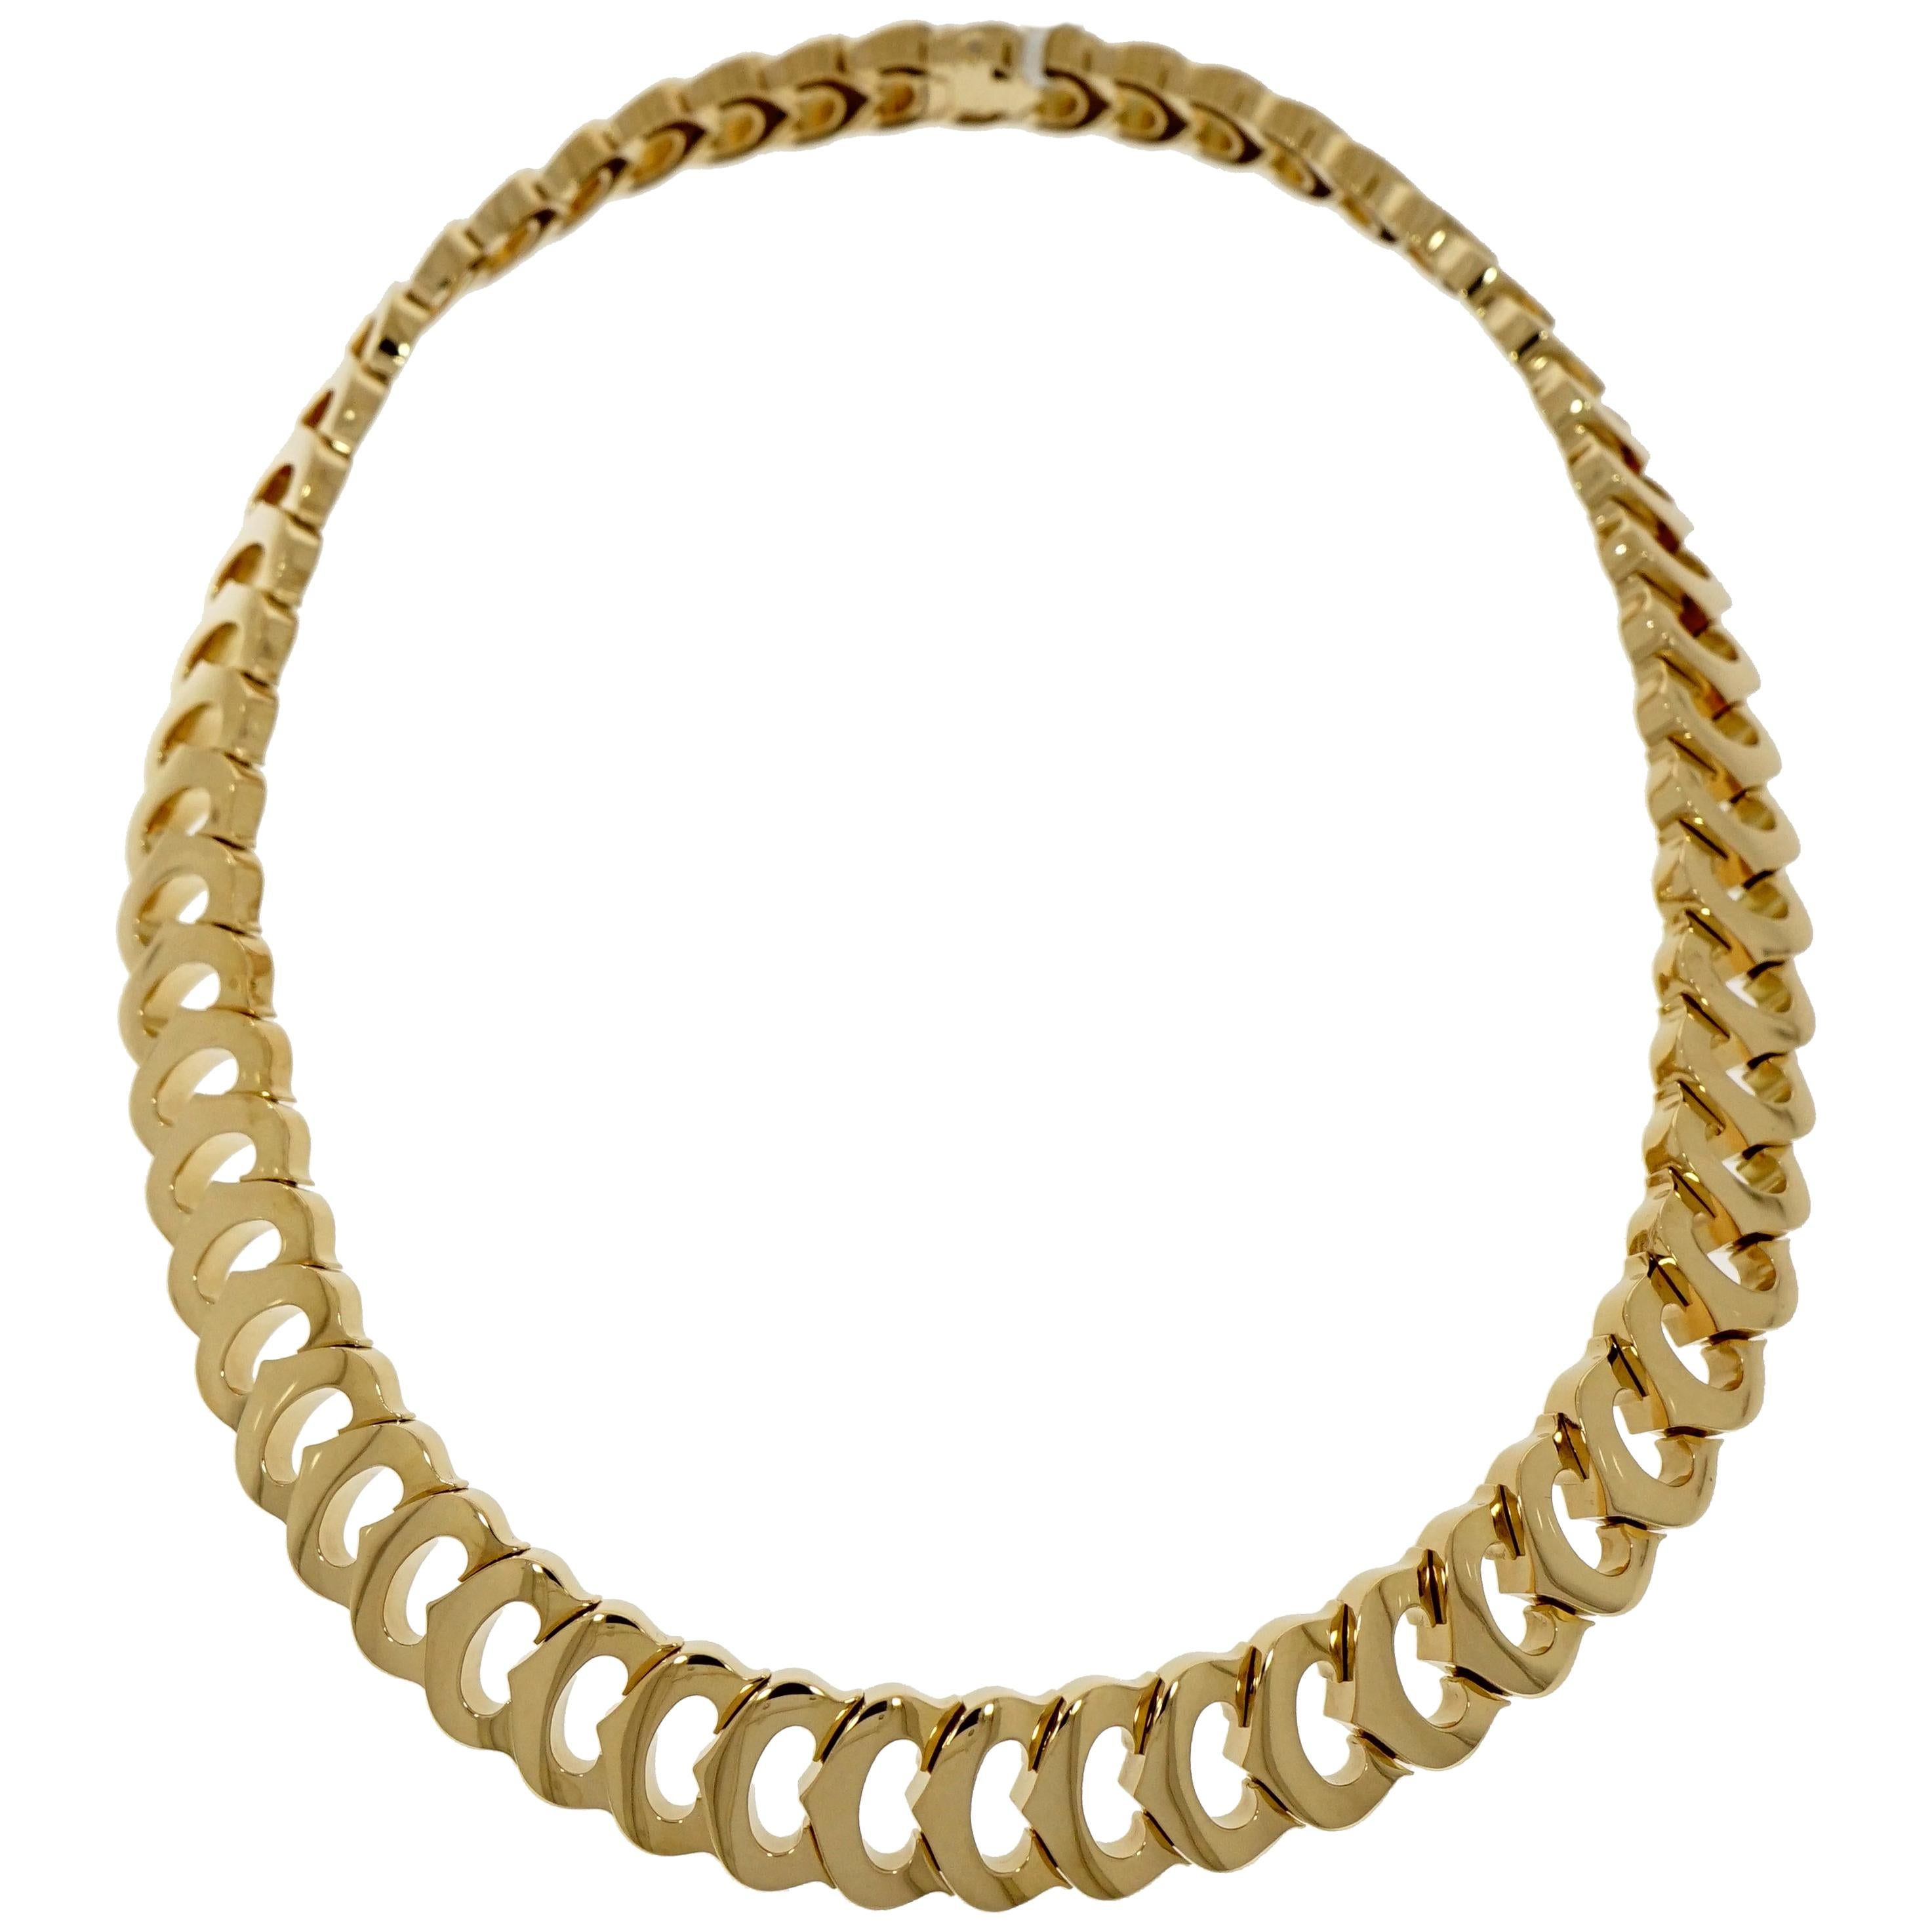 Cartier "C" Yellow Gold Link Chocker Necklace